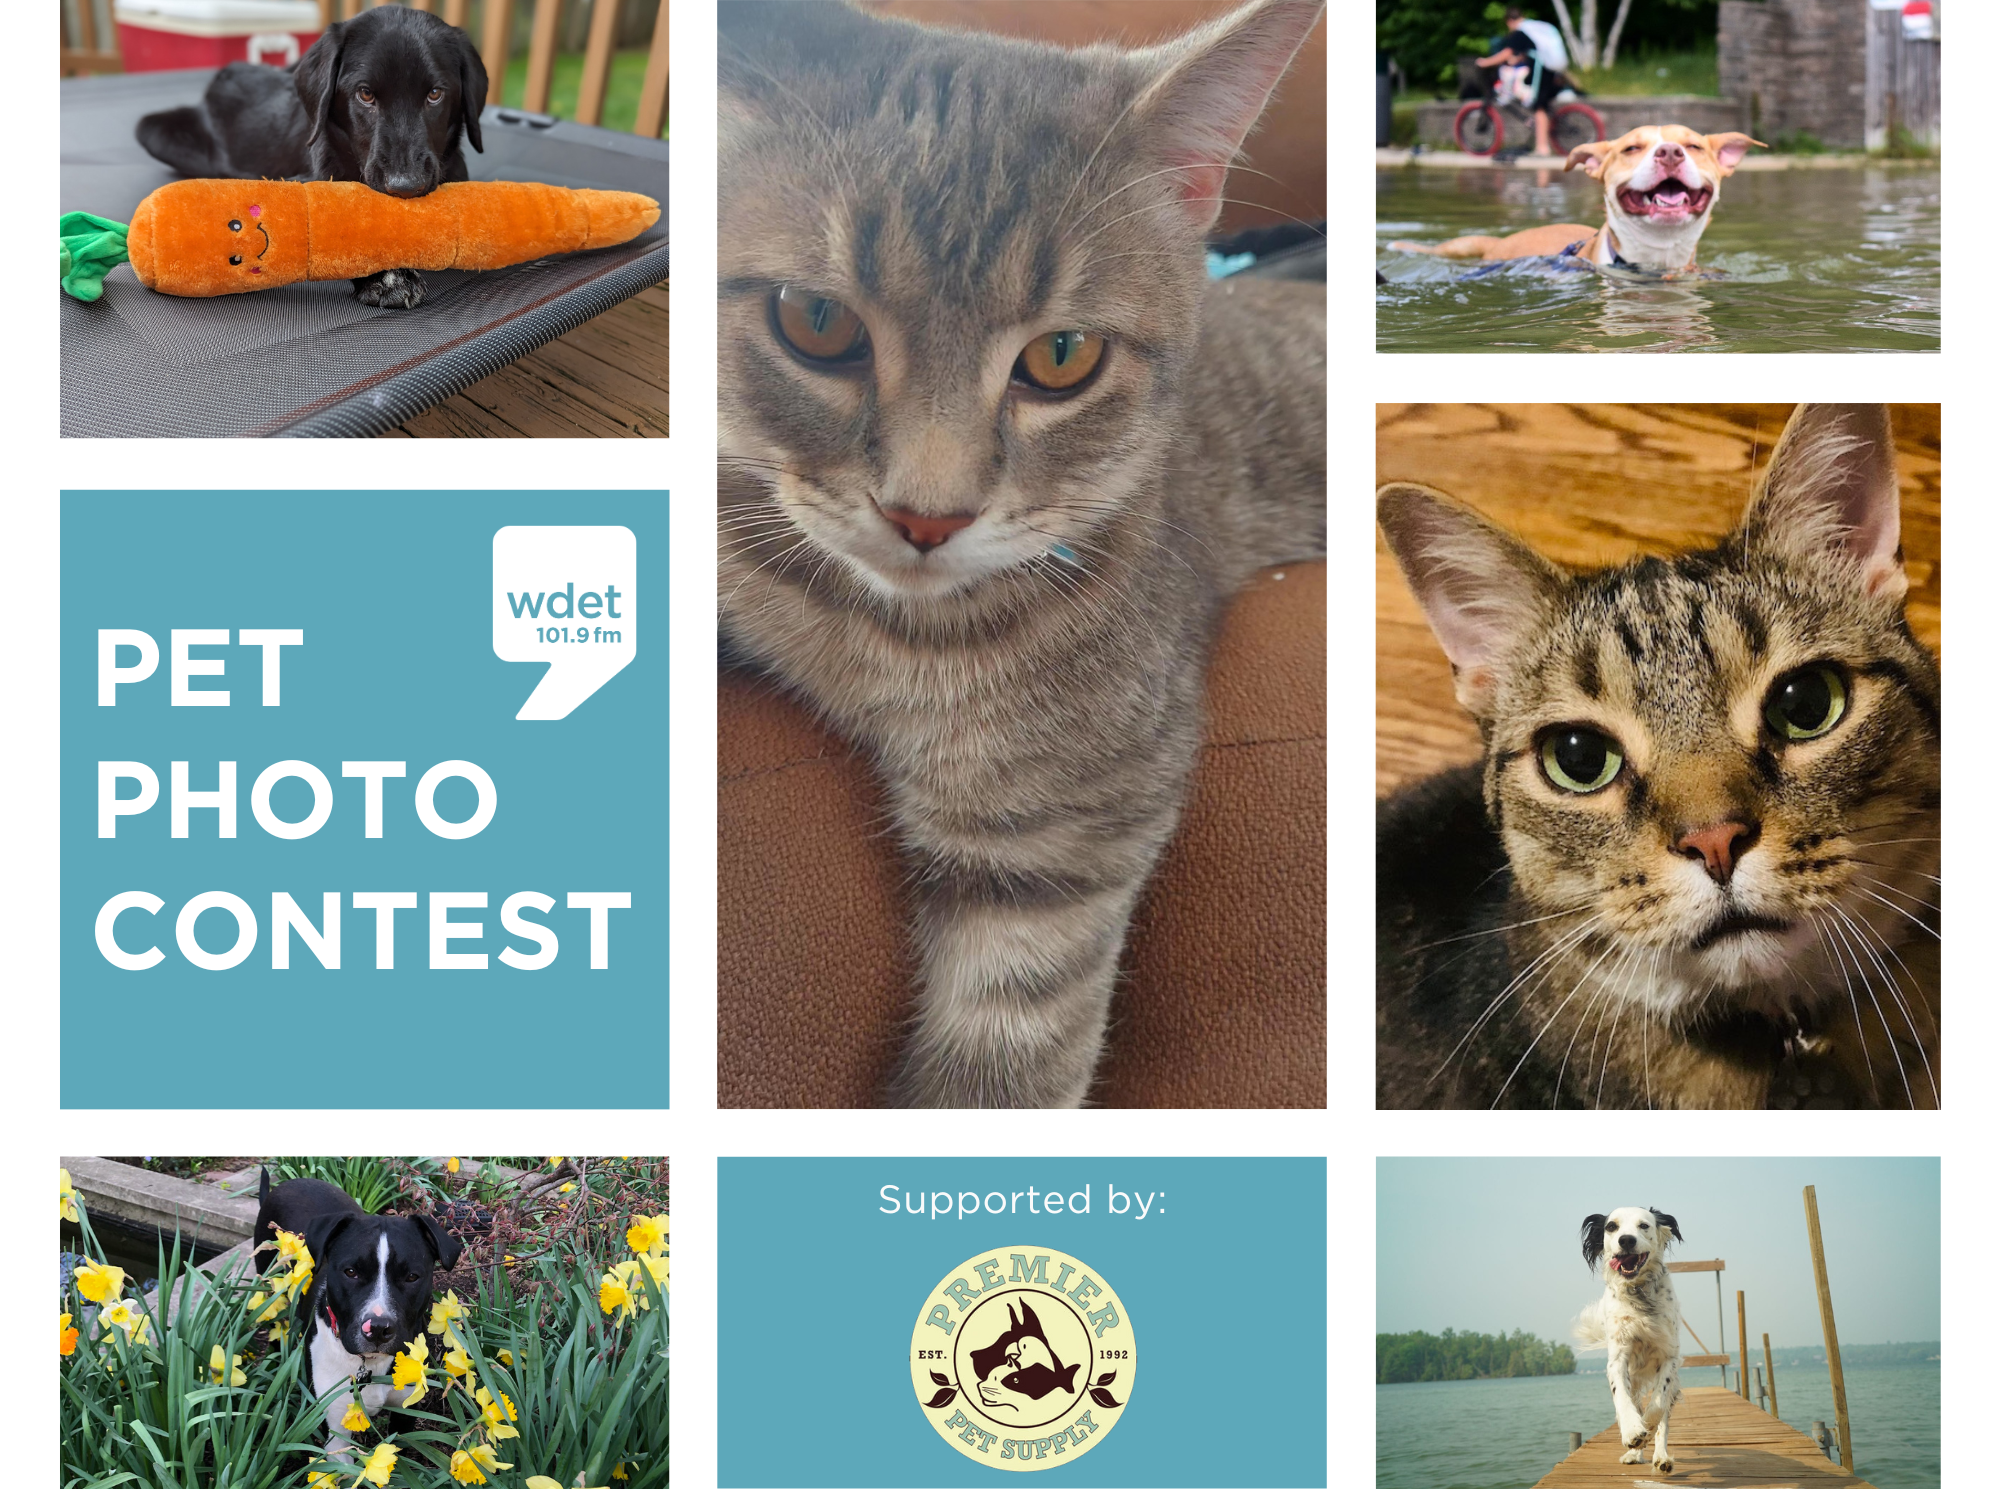 WDET pet photo contest